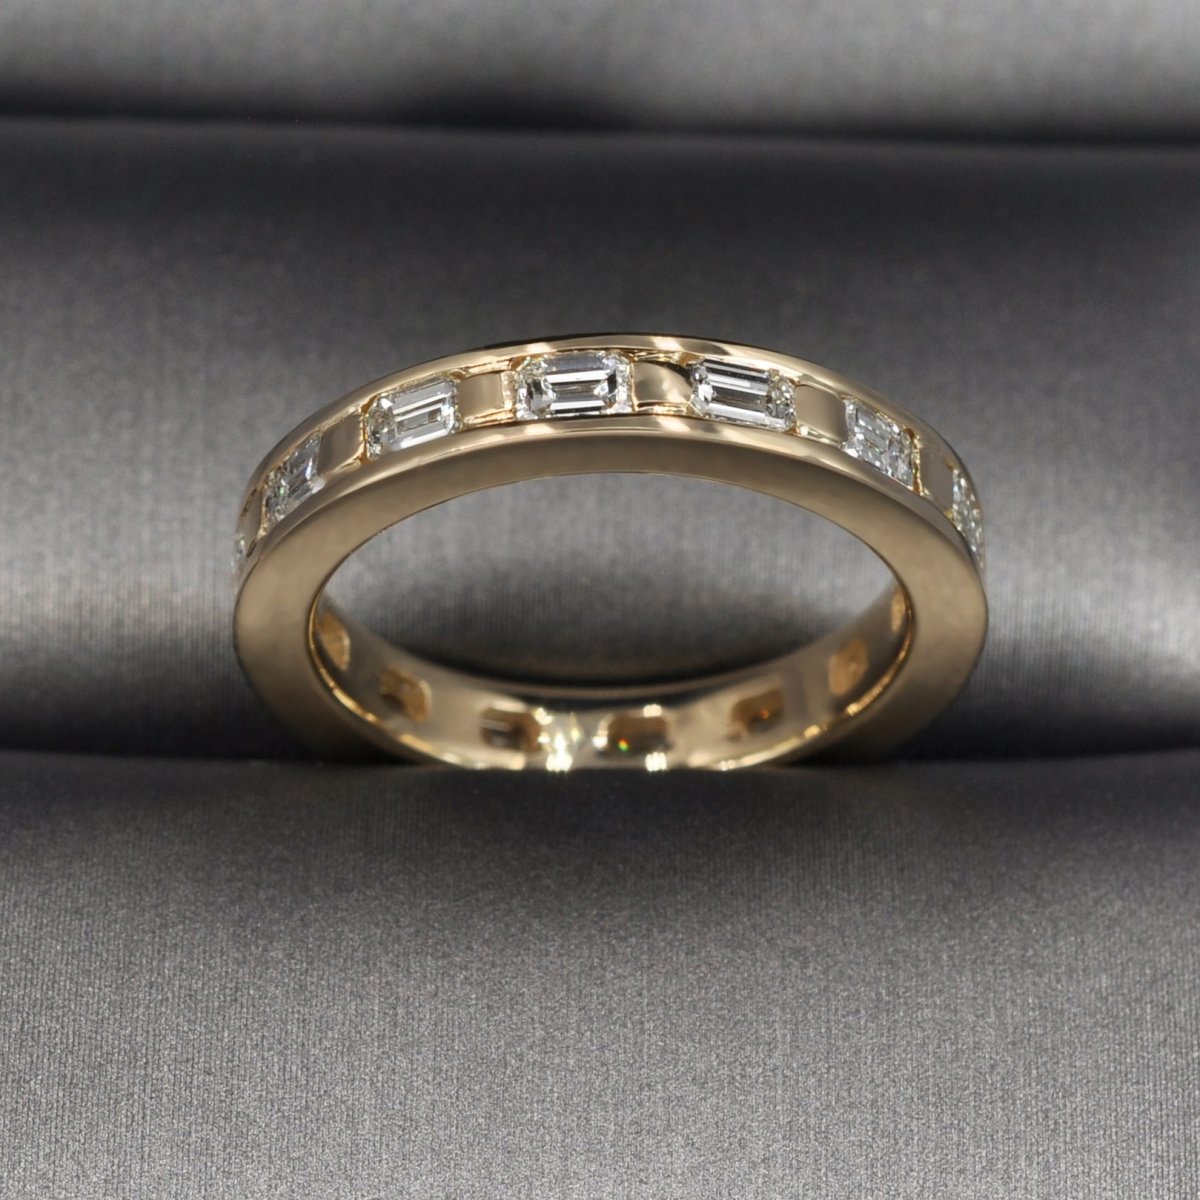 Stunning 2.50 CT Emerald Cut Diamond Eternity Ring in 14KT Yellow Gold - Primestyle.com